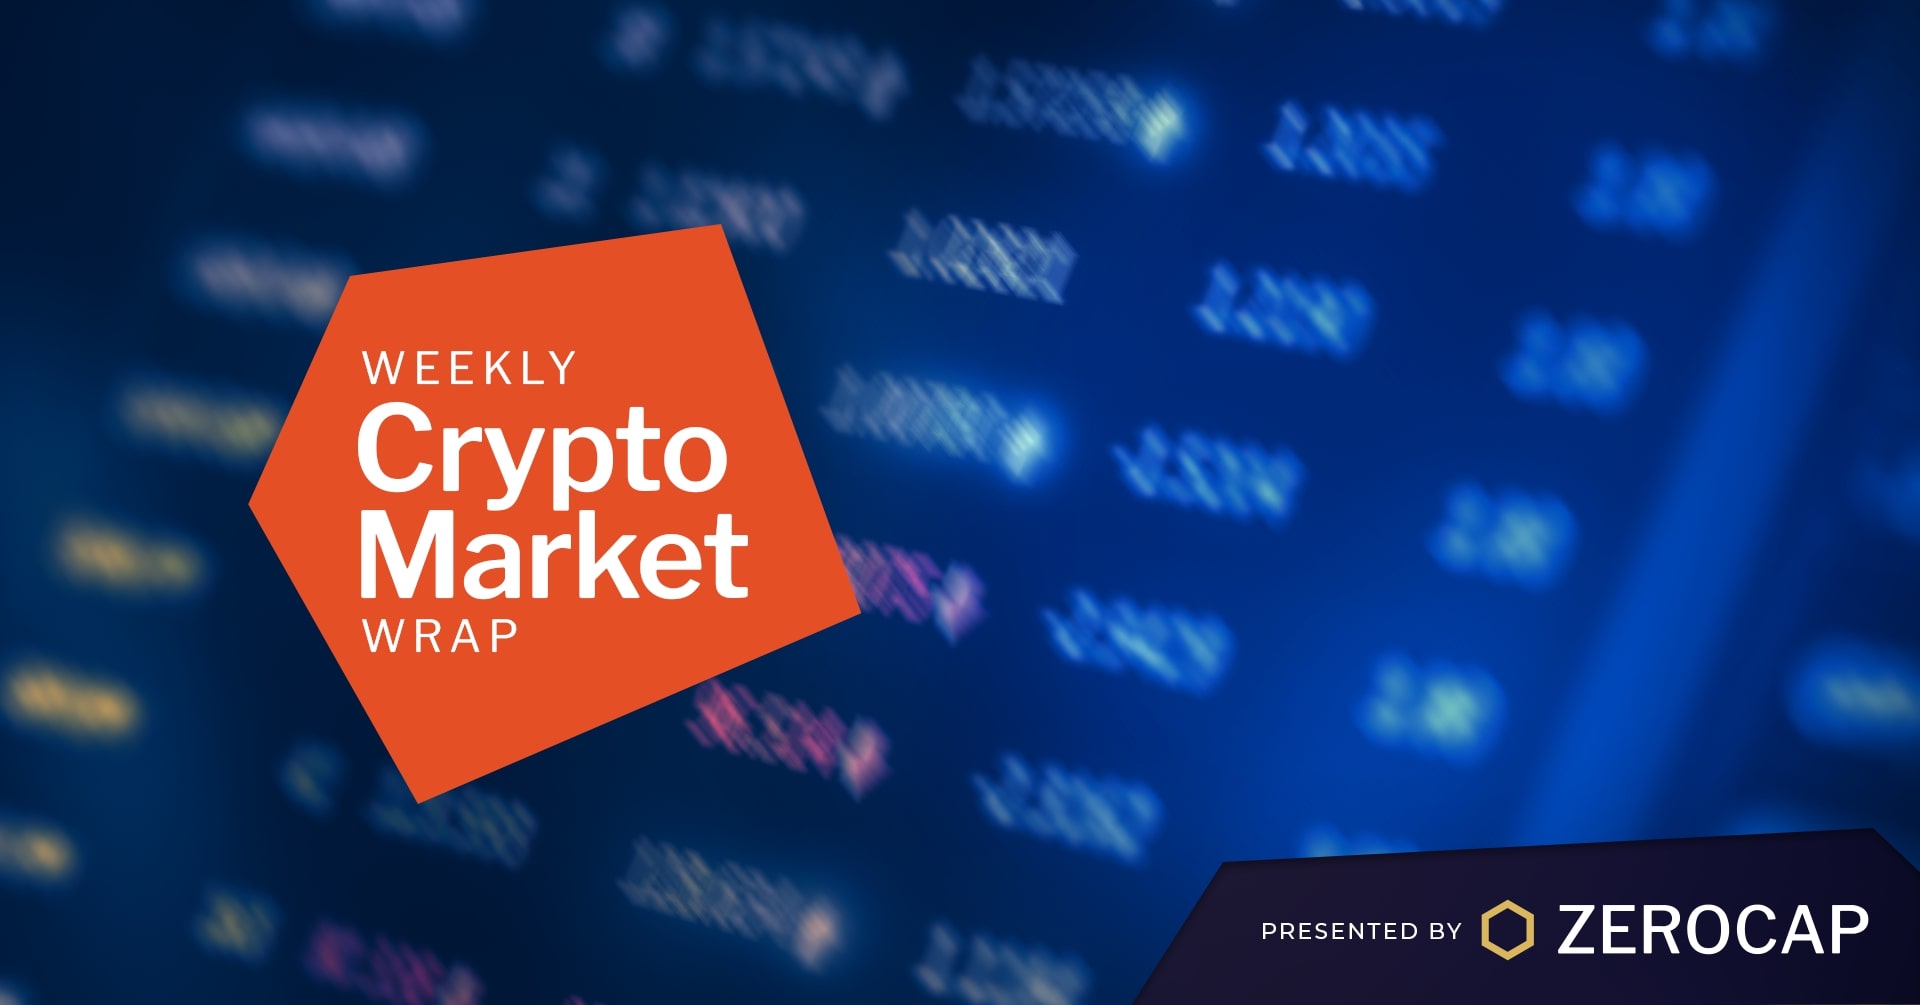 Weekly Crypto MArket Wrap